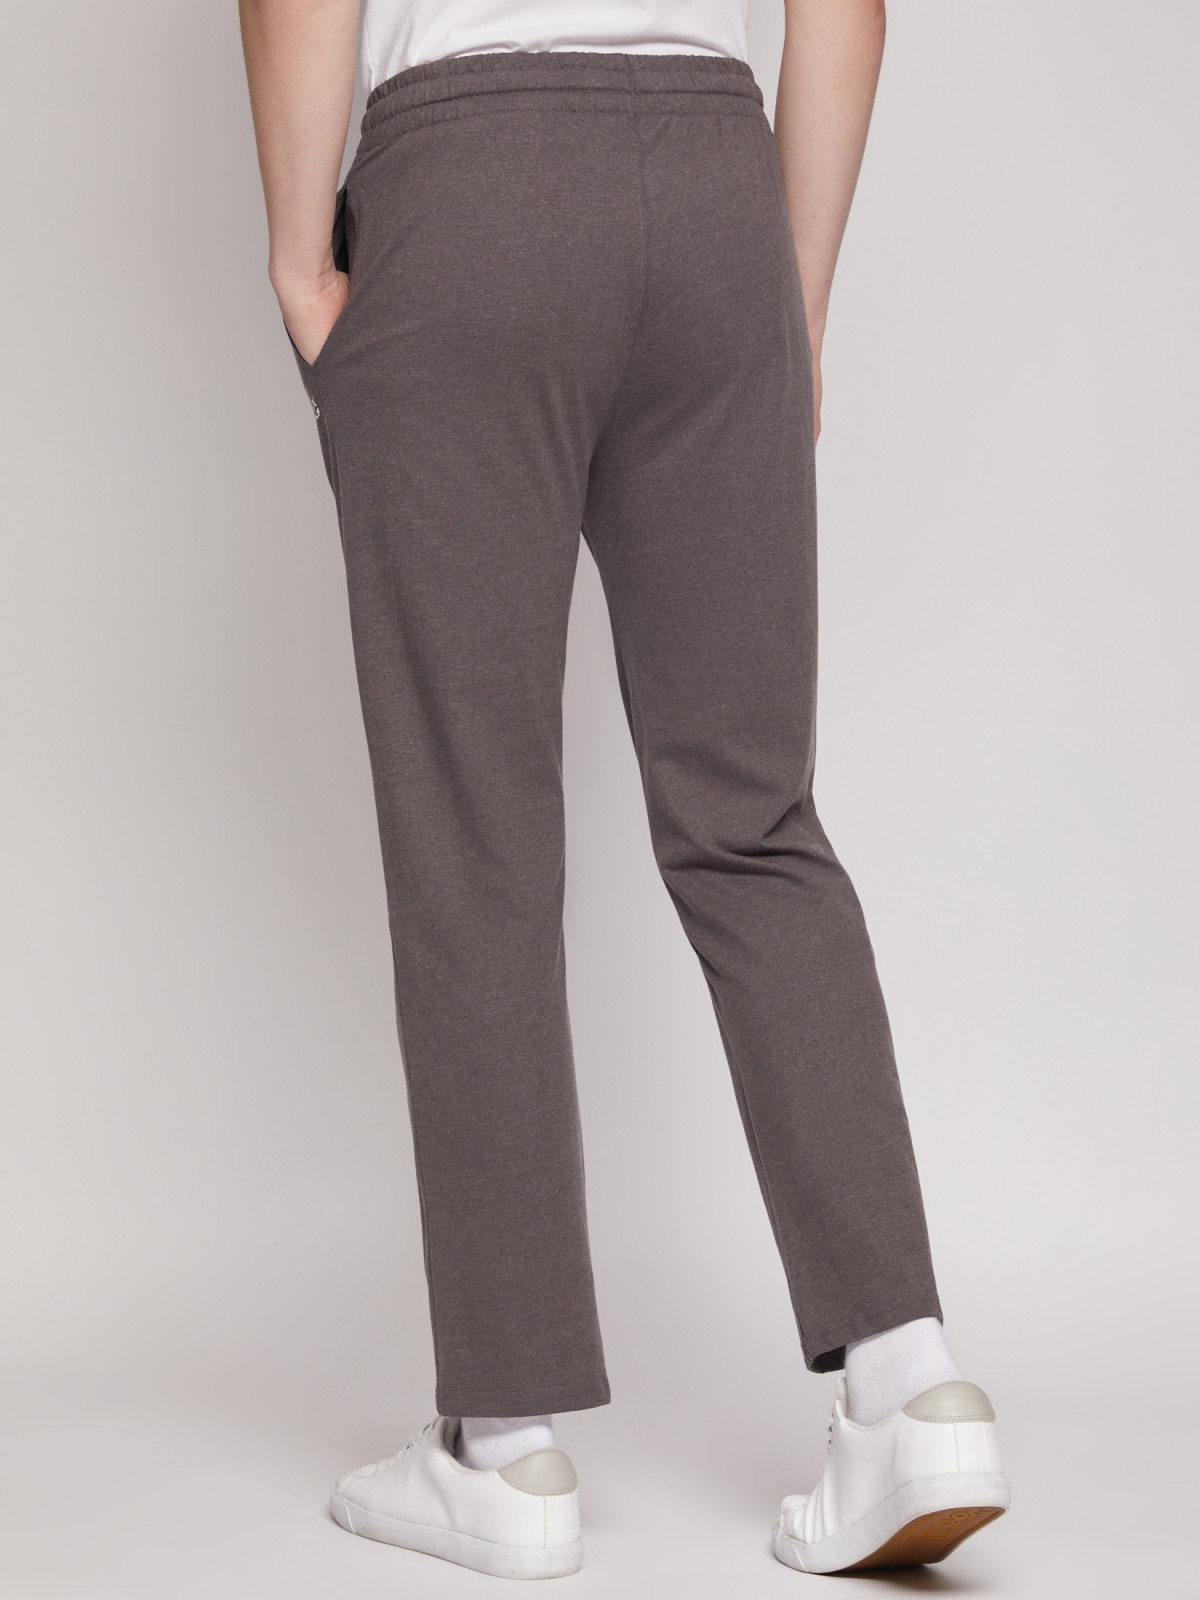 Спортивные брюки из трикотажа zolla 01231765Q032, цвет темно-серый, размер S - фото 6